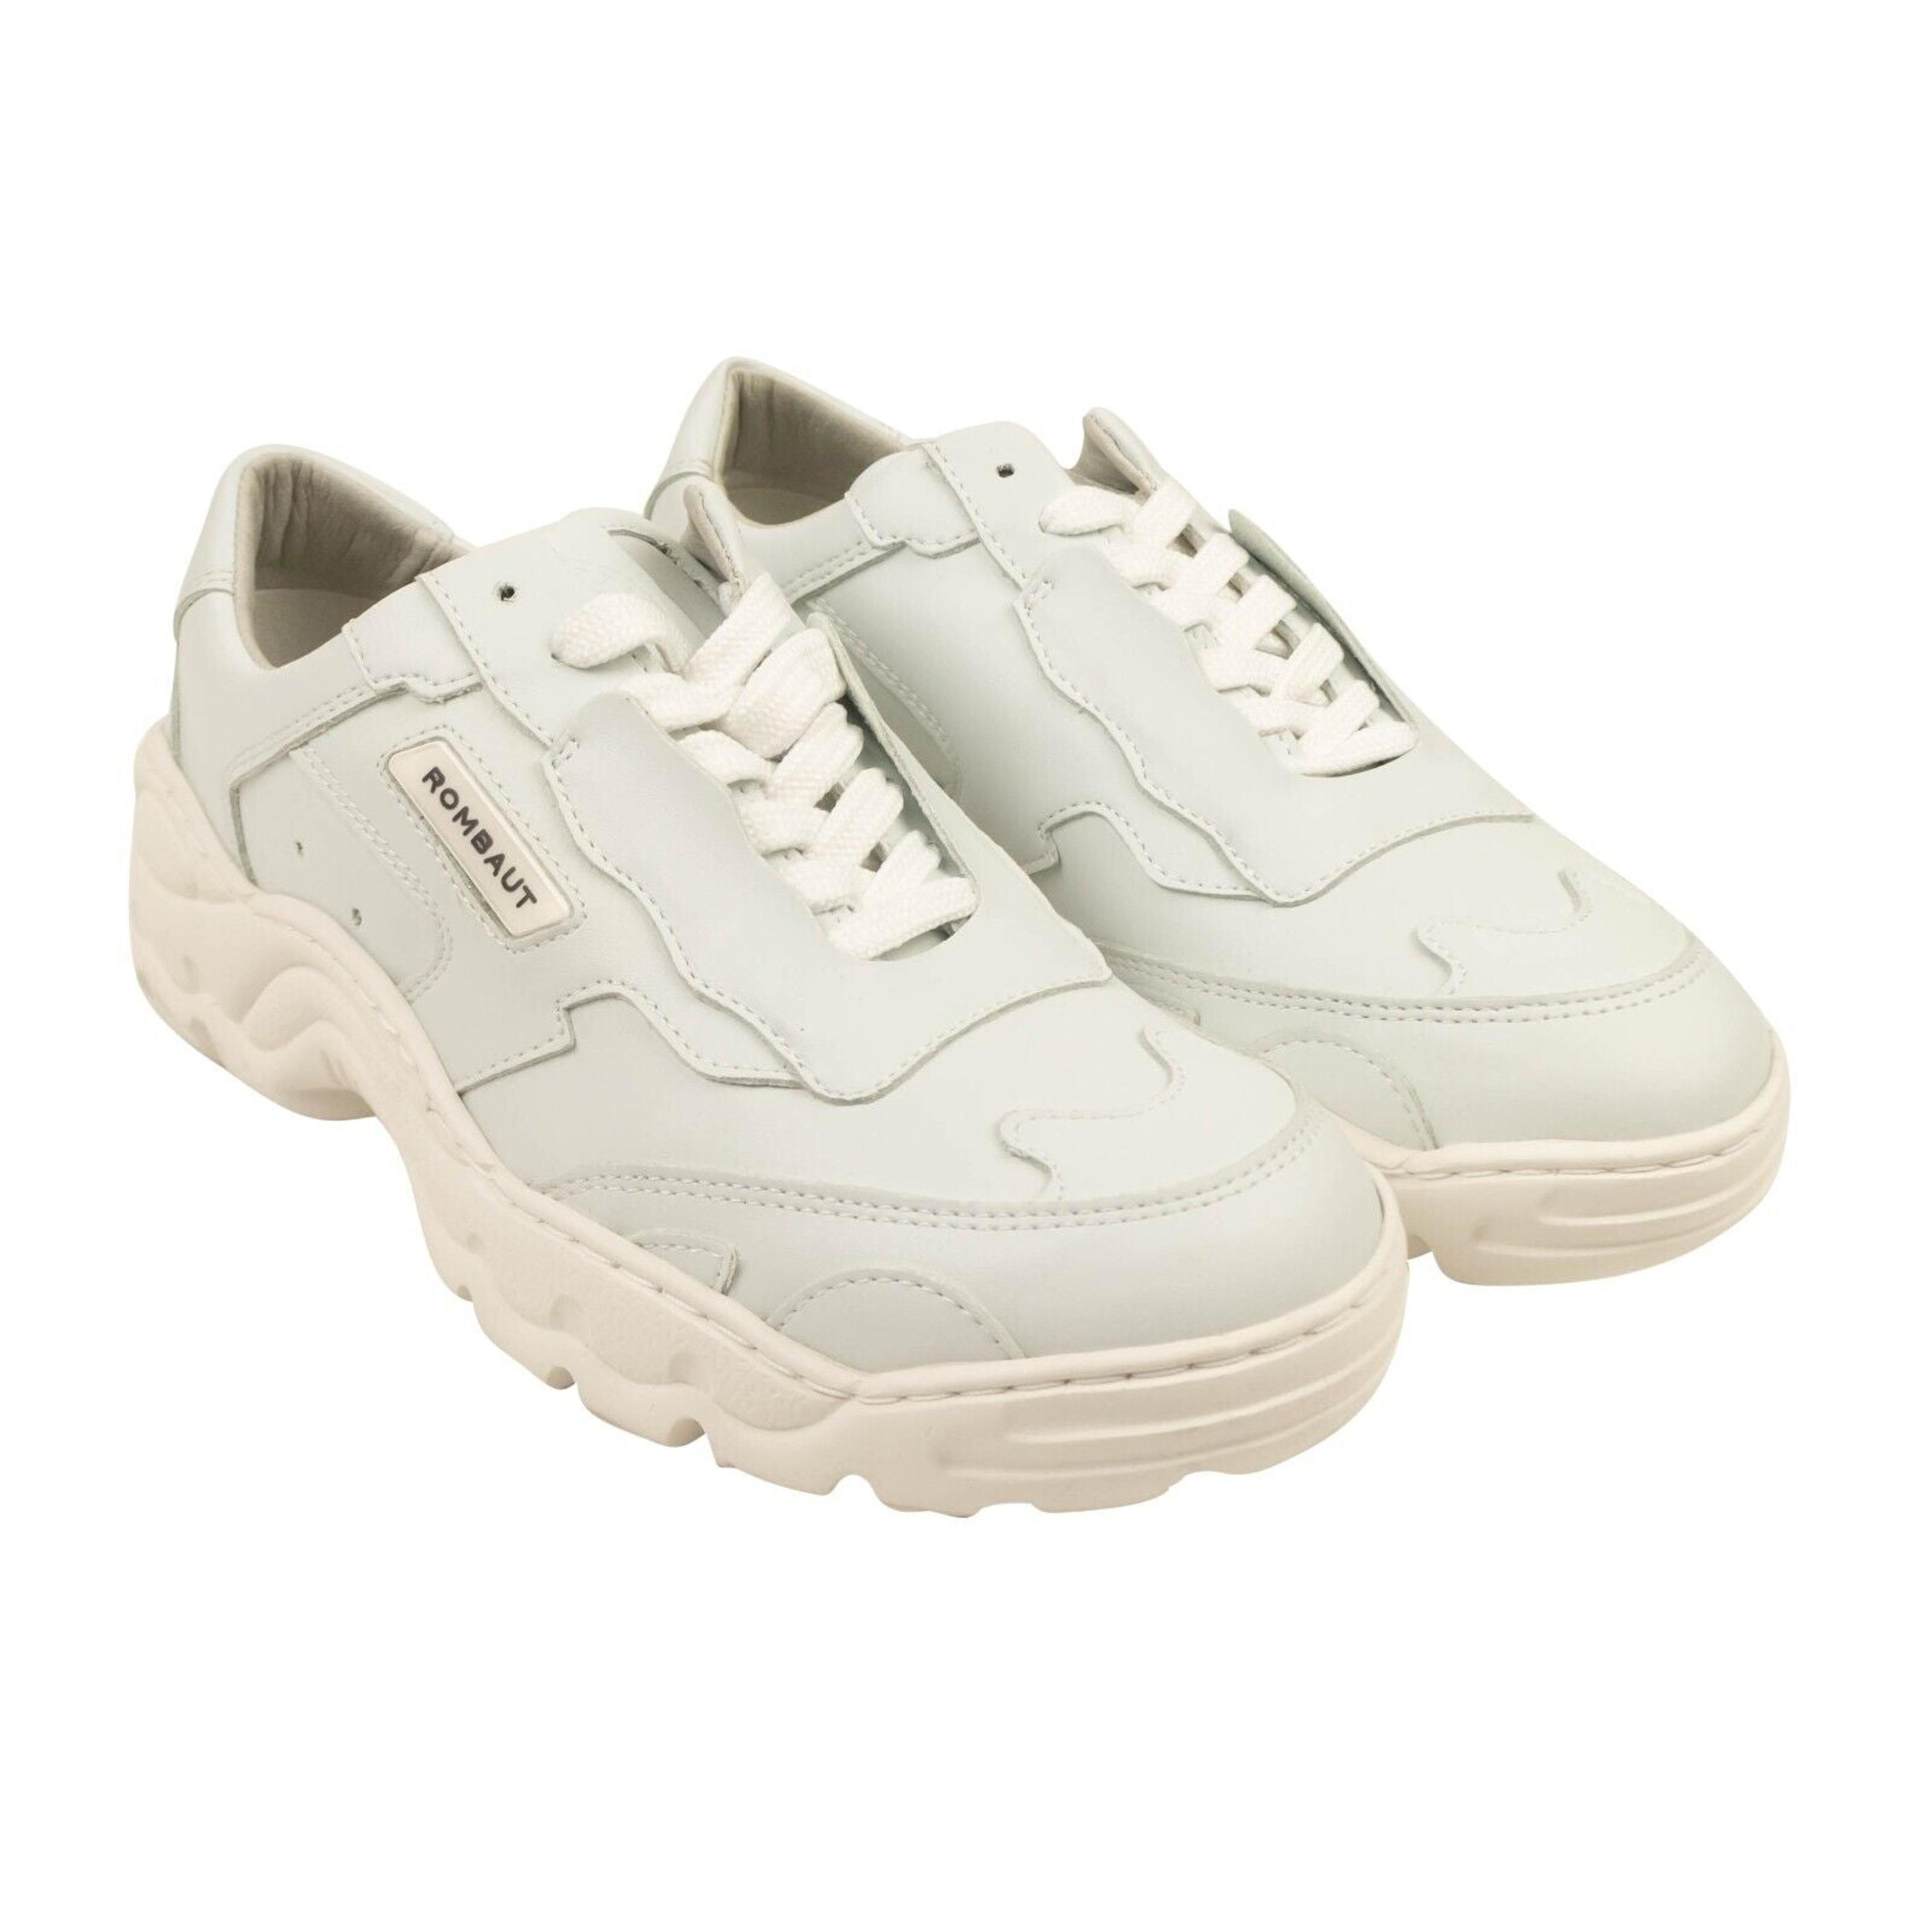 Alternate View 2 of White Leather Boccaccio Low Sneakers